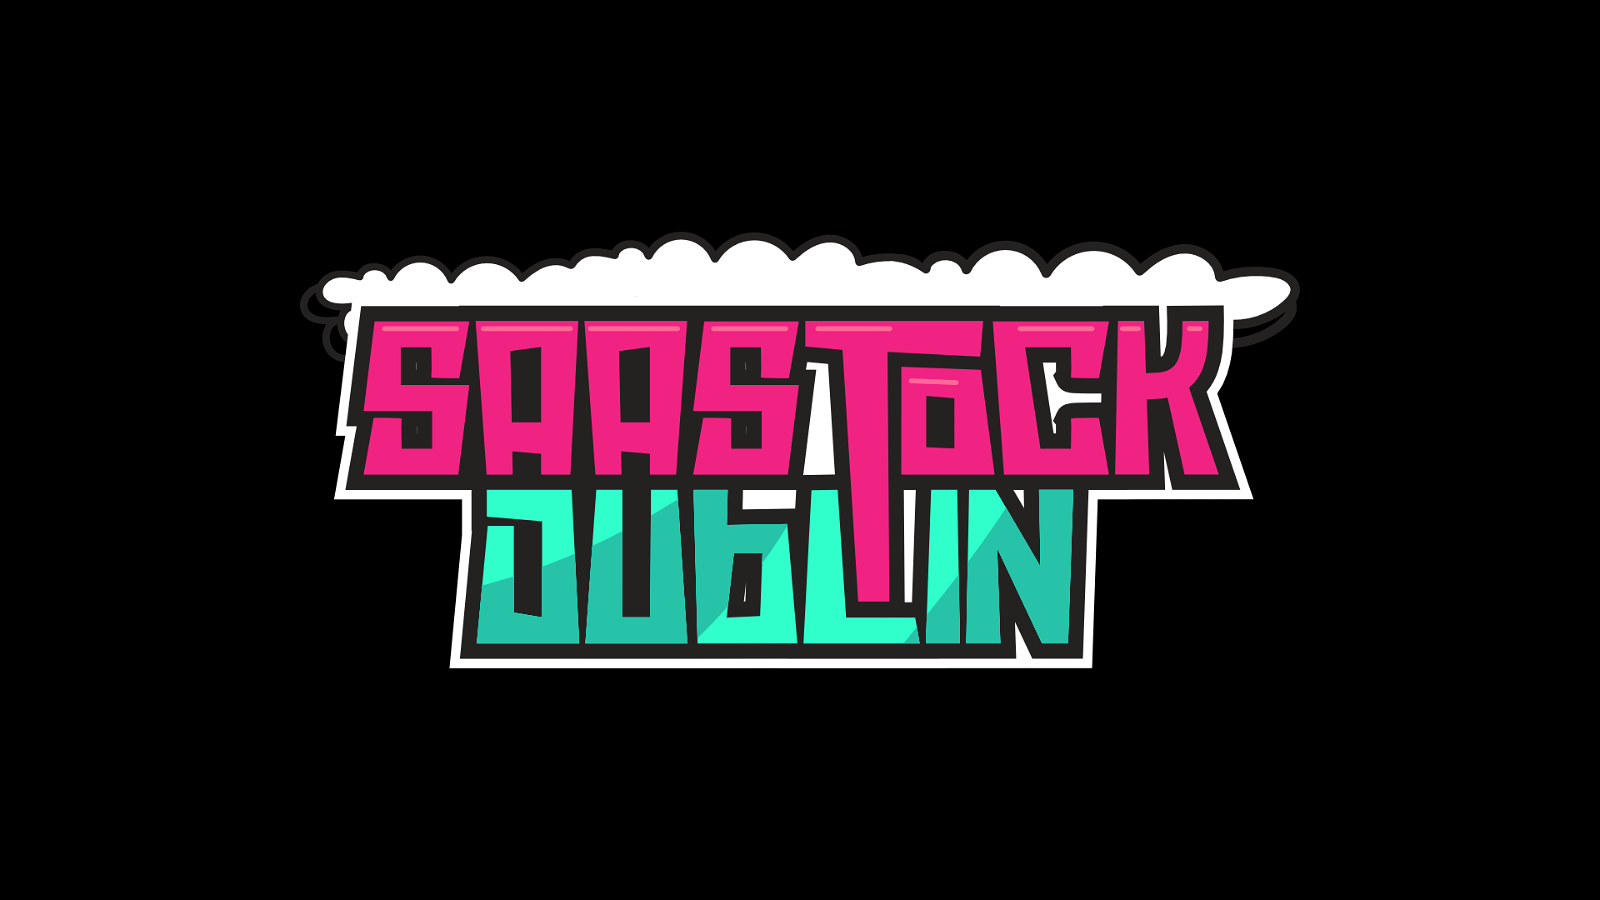 SaaStock Dublin